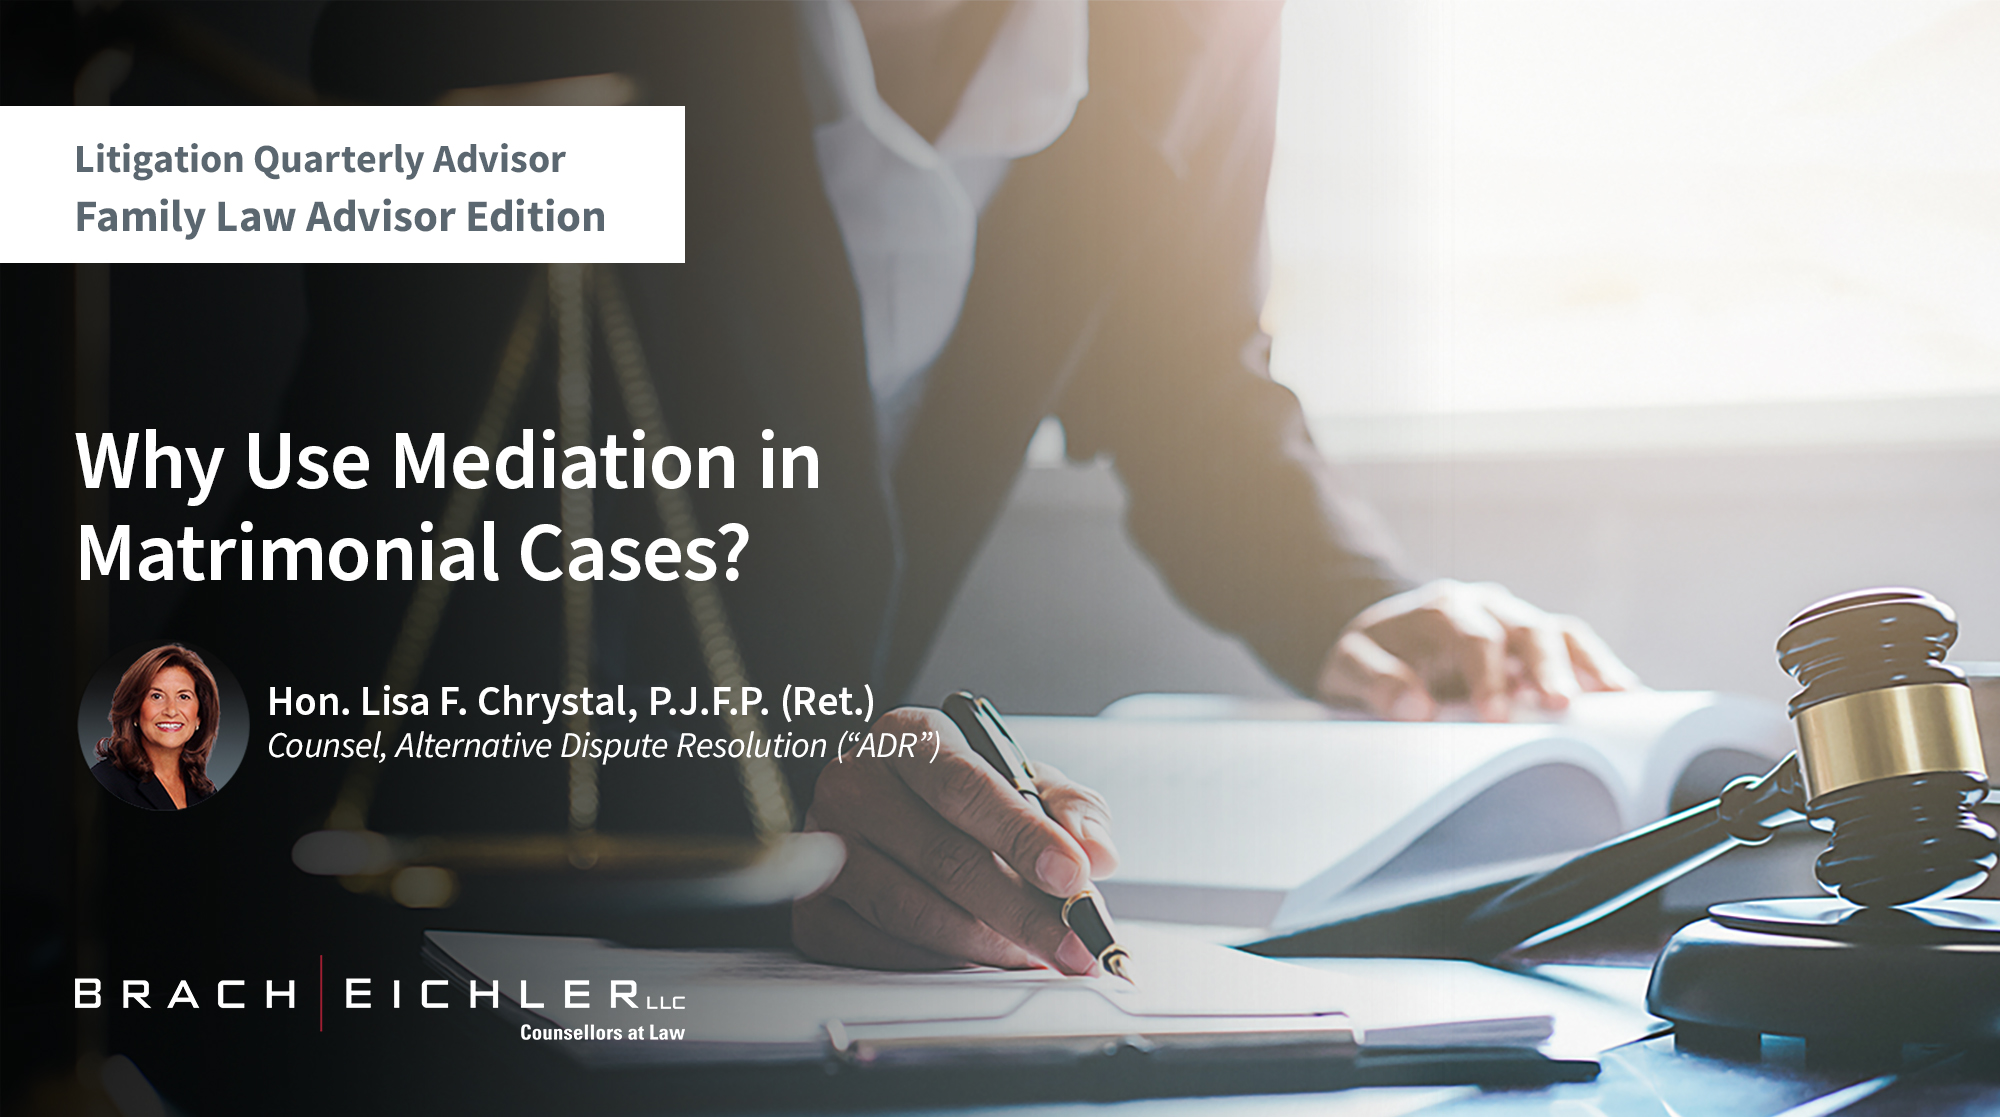 WHY USE MEDIATION IN MATRIMONIAL CASES? - Litigation Quarterly Advisor - Family Law Advisor Edition - Brach Eichler